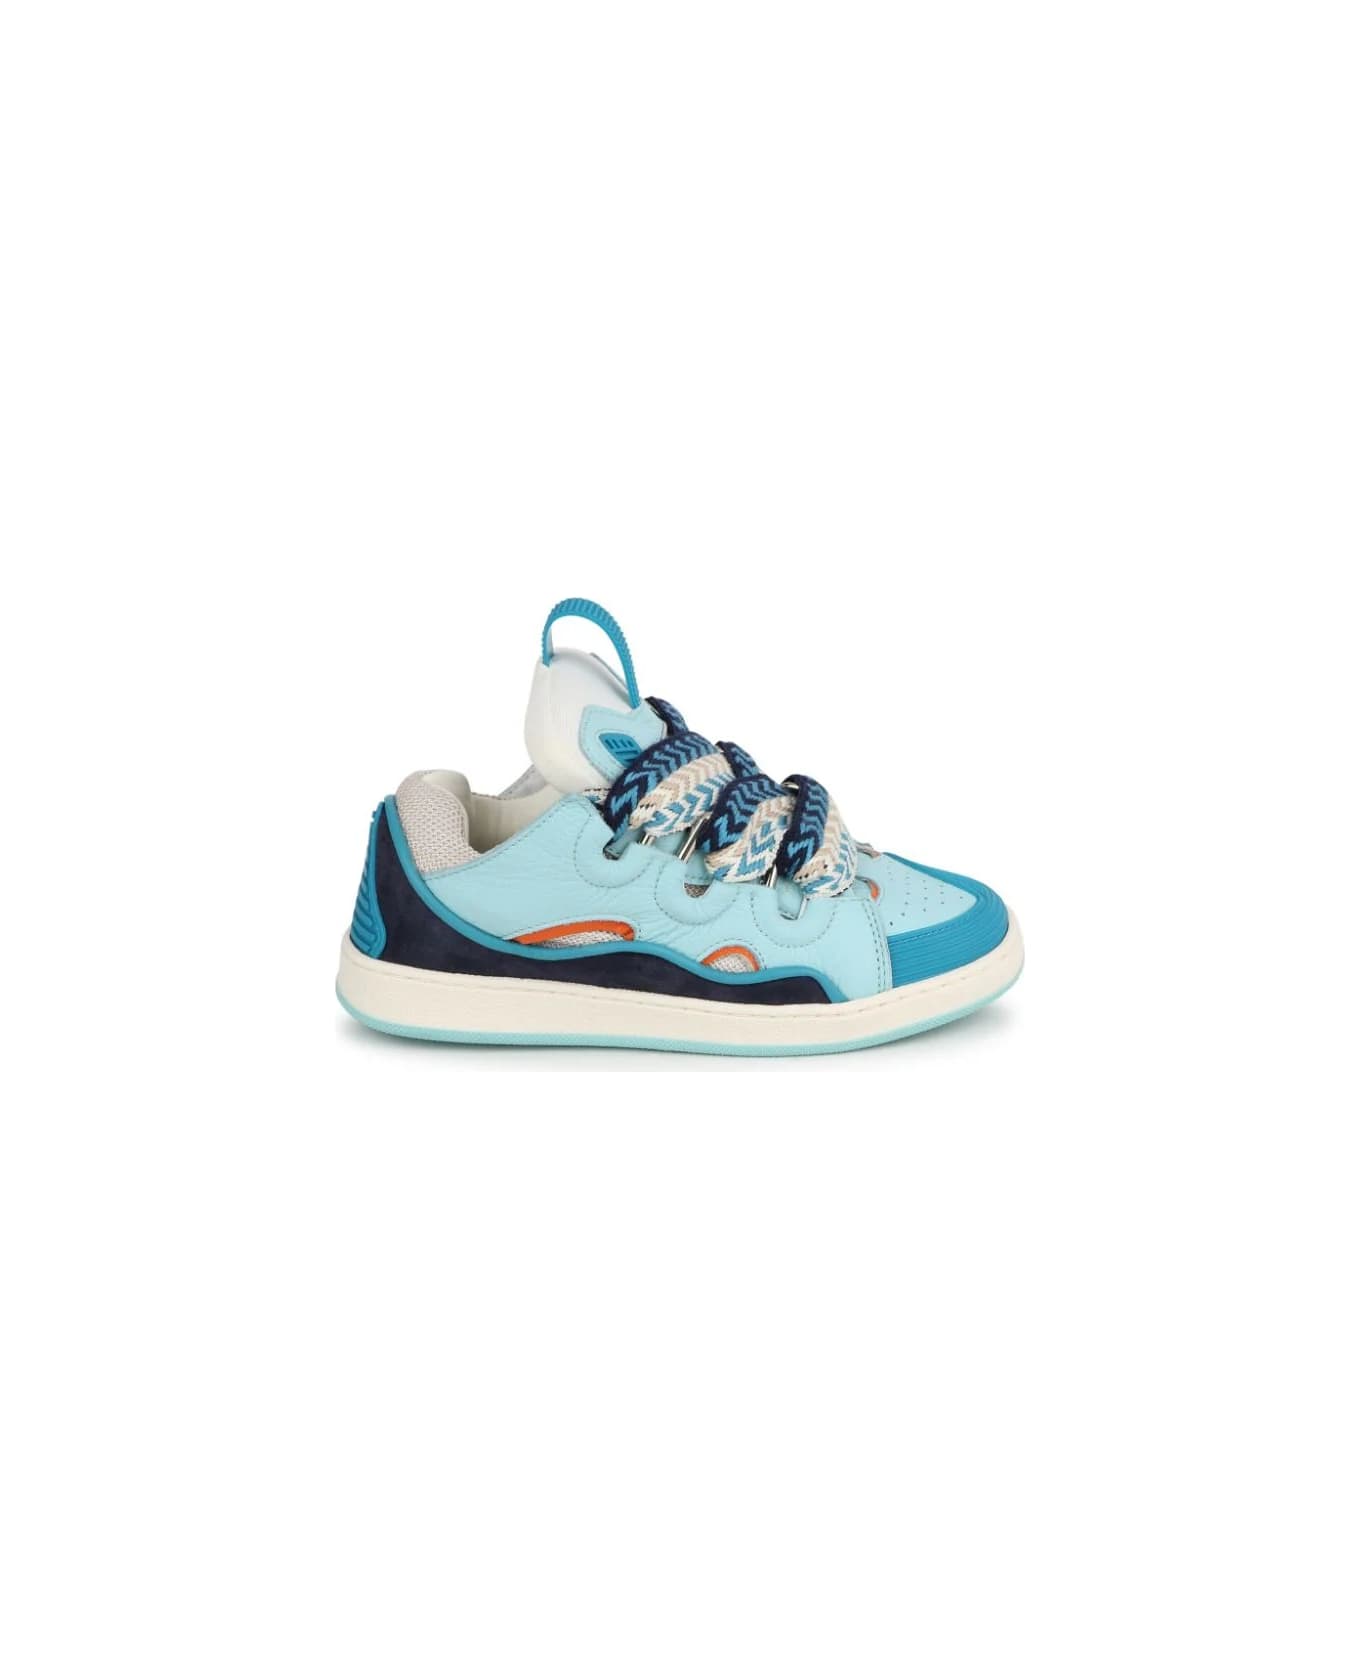 Lanvin Aquamarine Leather Curb Sneakers - Blue